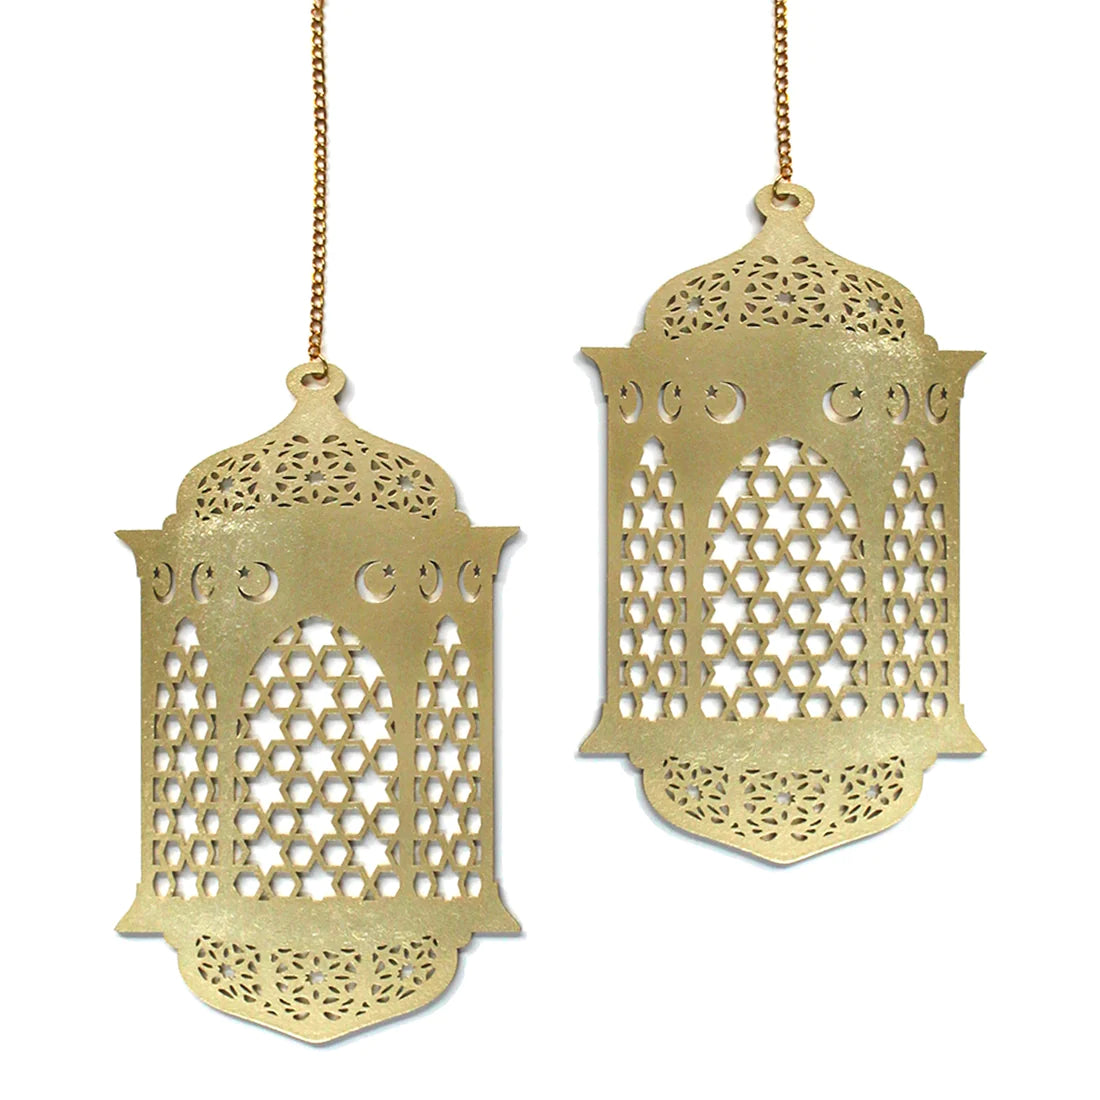 2 Gold Wooden Ramadan / Eid Lantern Hanging Decorations